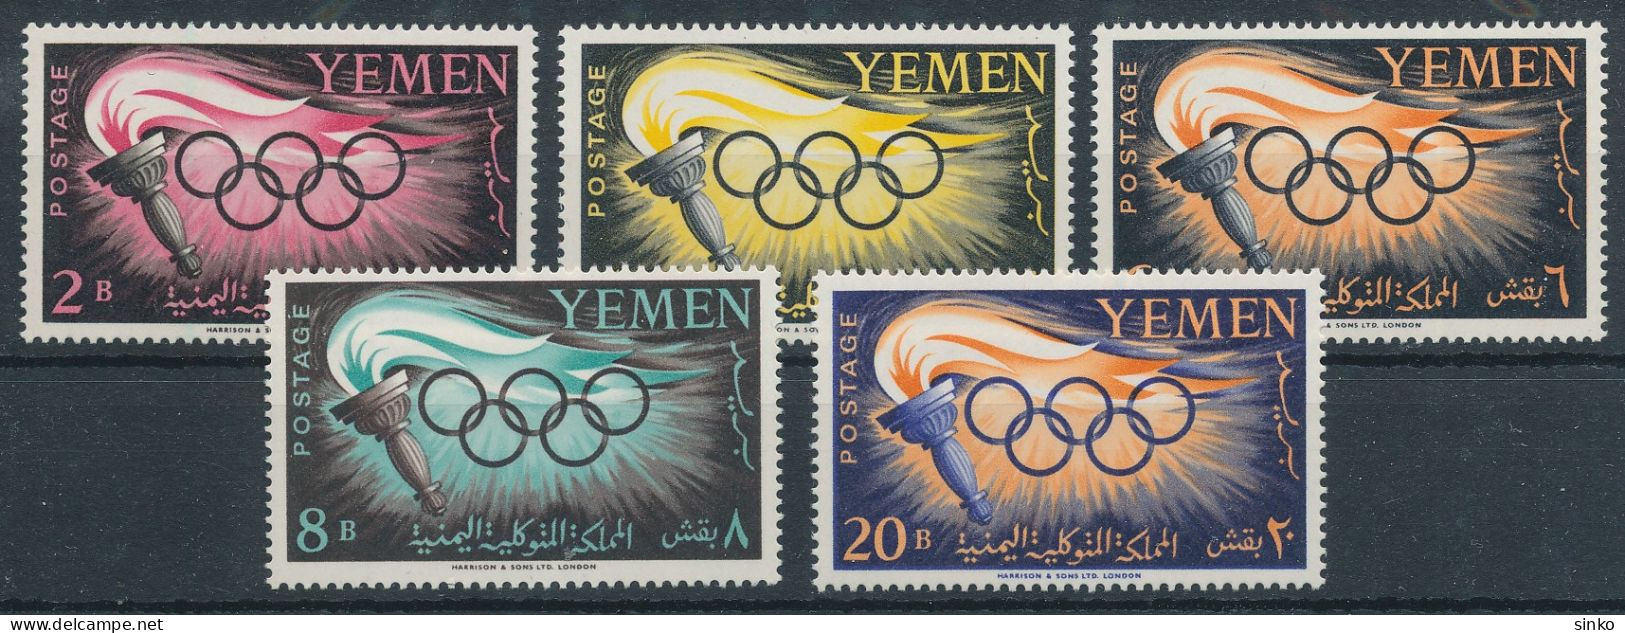 1960. Yemen - Olympics - Estate 1960: Roma